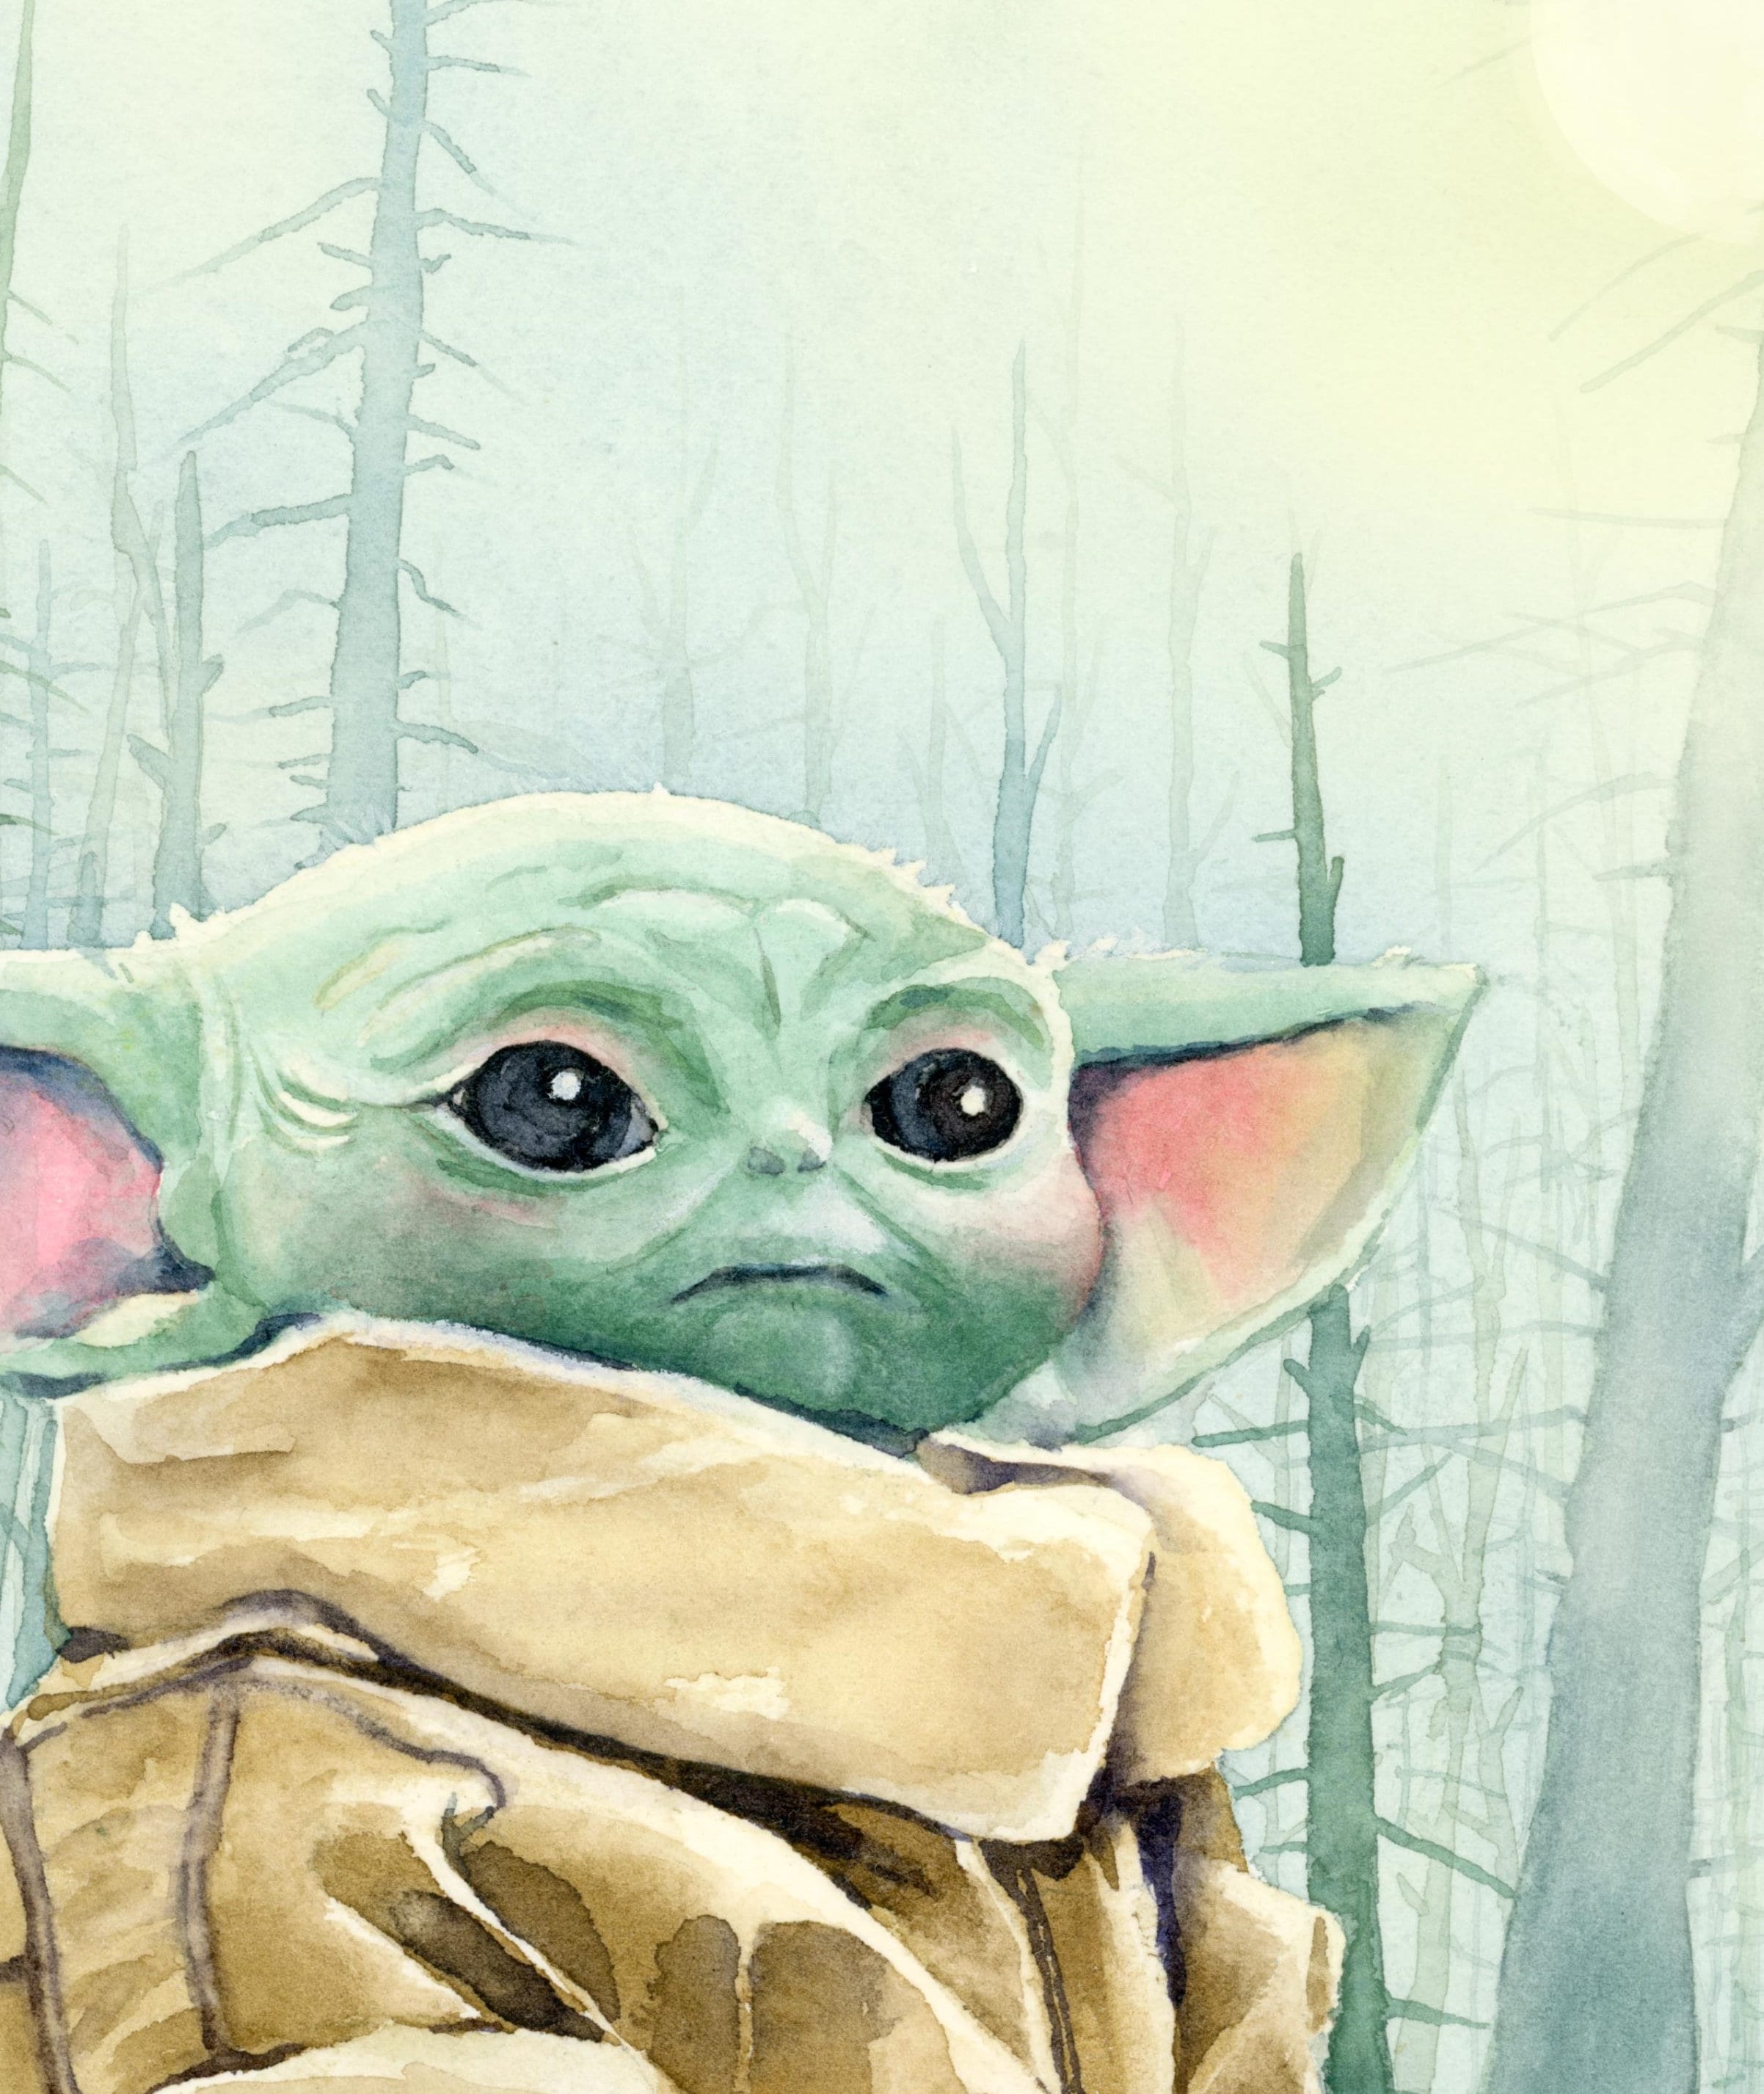 Grogu, baby Yoda fan art – Veronica Winters Painting